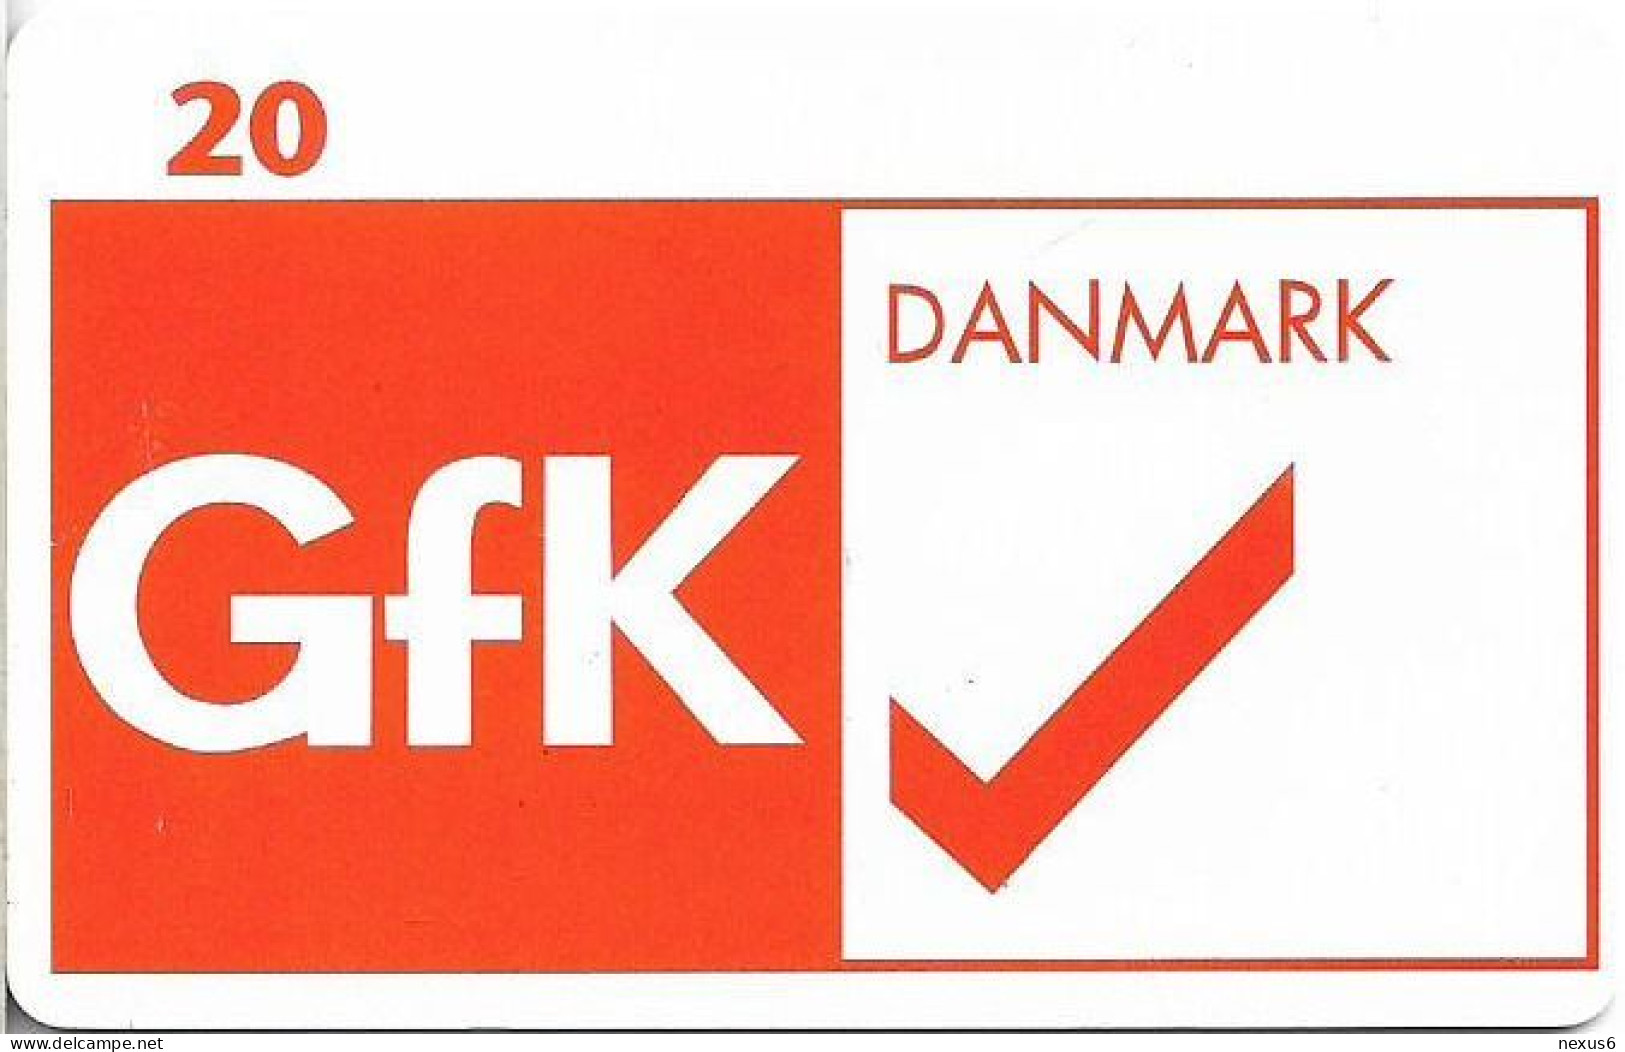 Denmark - Tele Danmark (chip) - GFK Danmark AS - TDP213B - 07.1998, 1.100ex, 20kr, Used - Denmark